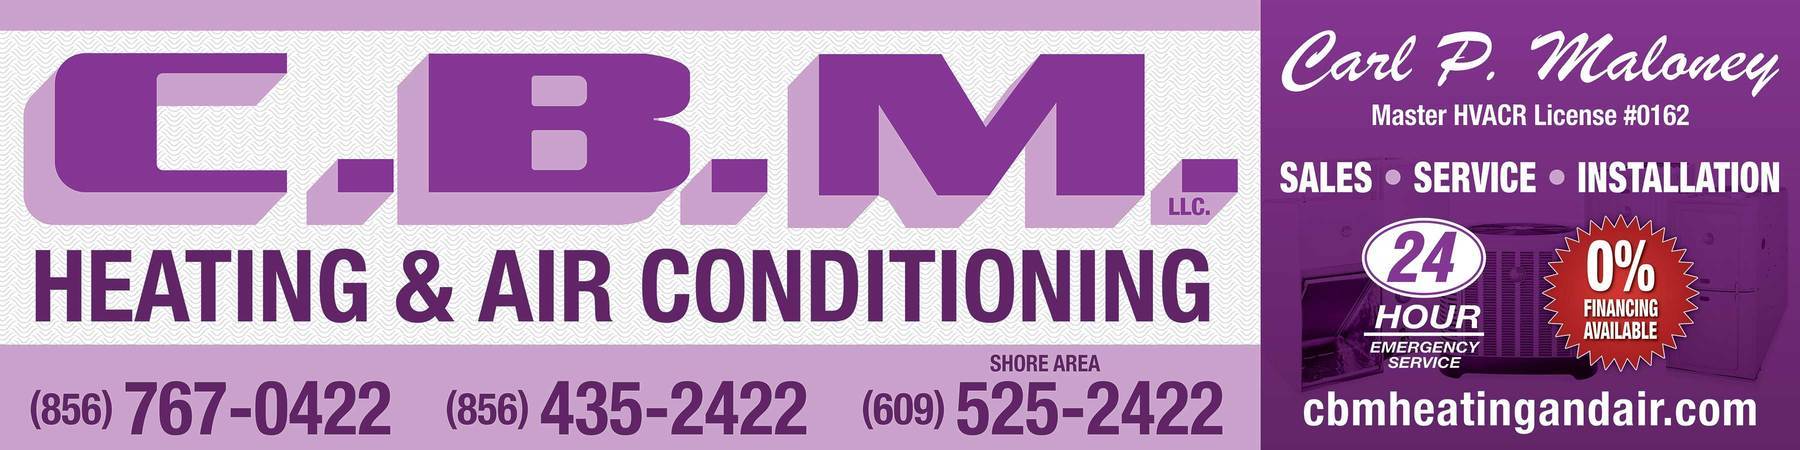 CBM Heating & Air ConditioningLogo